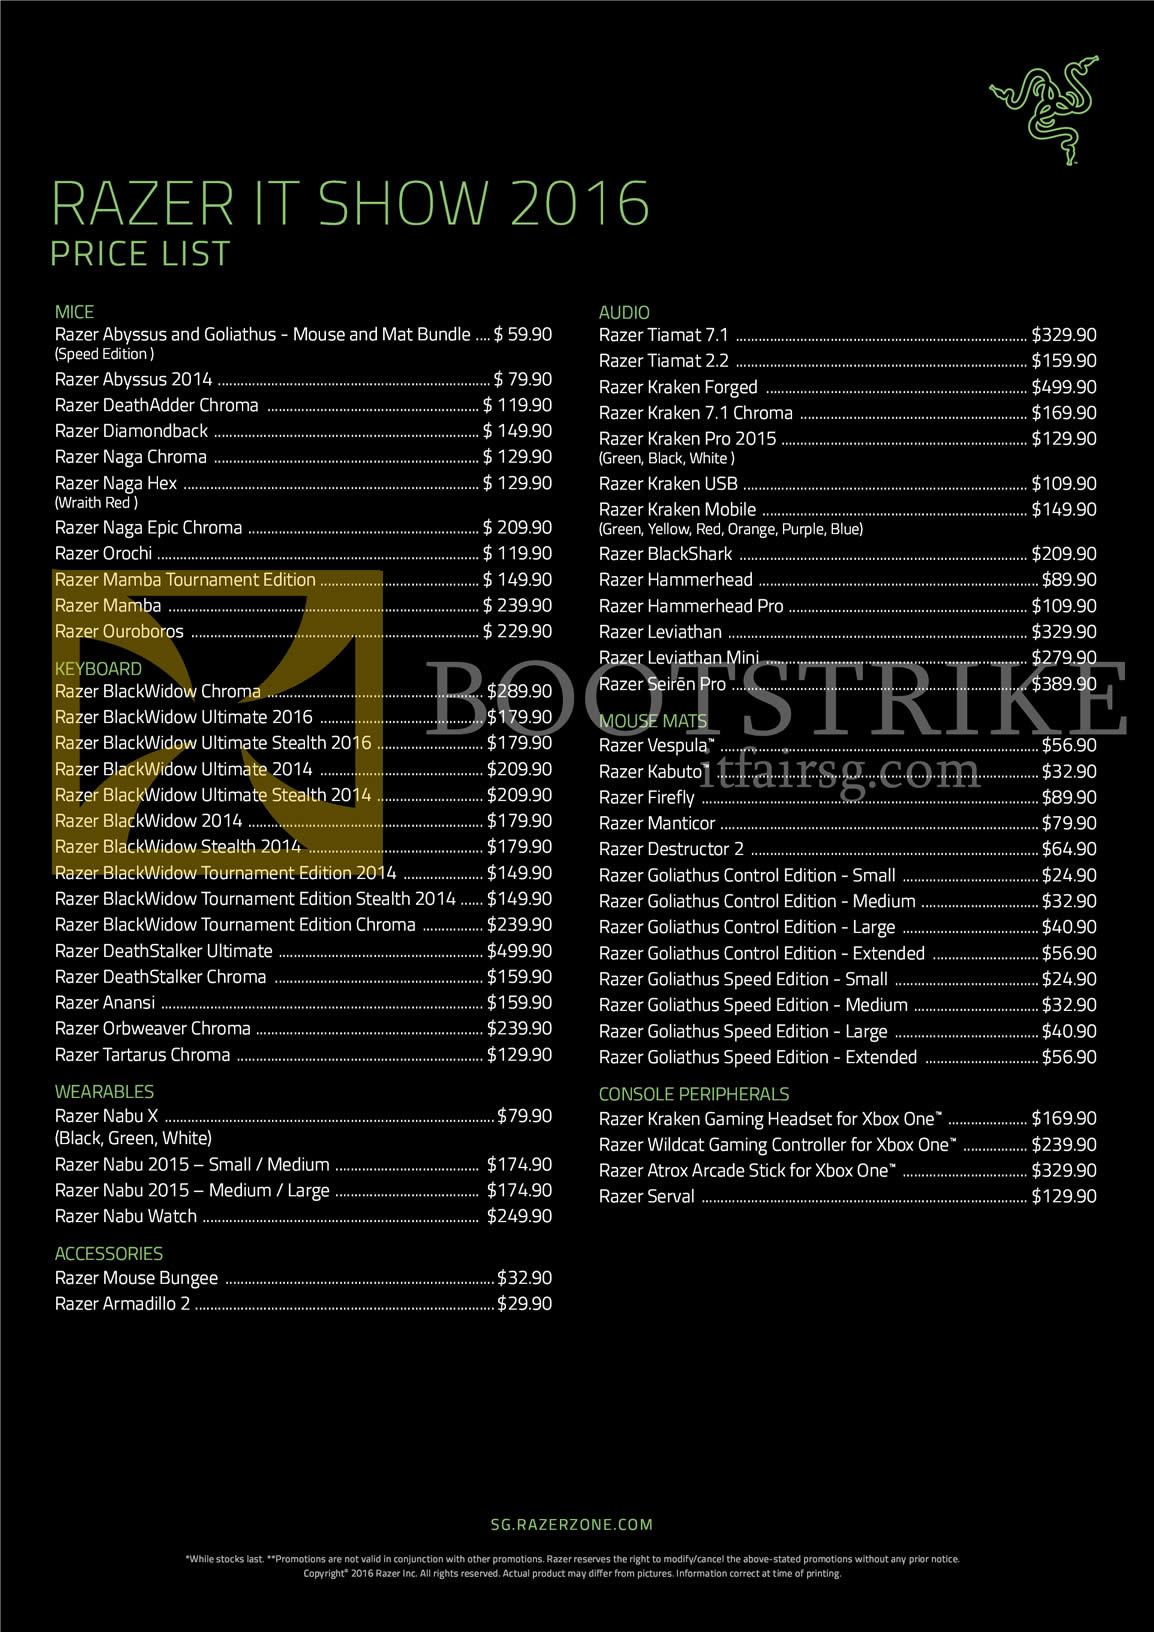 IT SHOW 2016 price list image brochure of Razer Razerzone Full Price List, Mouse, Audio, Mouse Mats, Console Peripherals, Wearables, BlackWidow, Nabu, Goliathus, Mamba